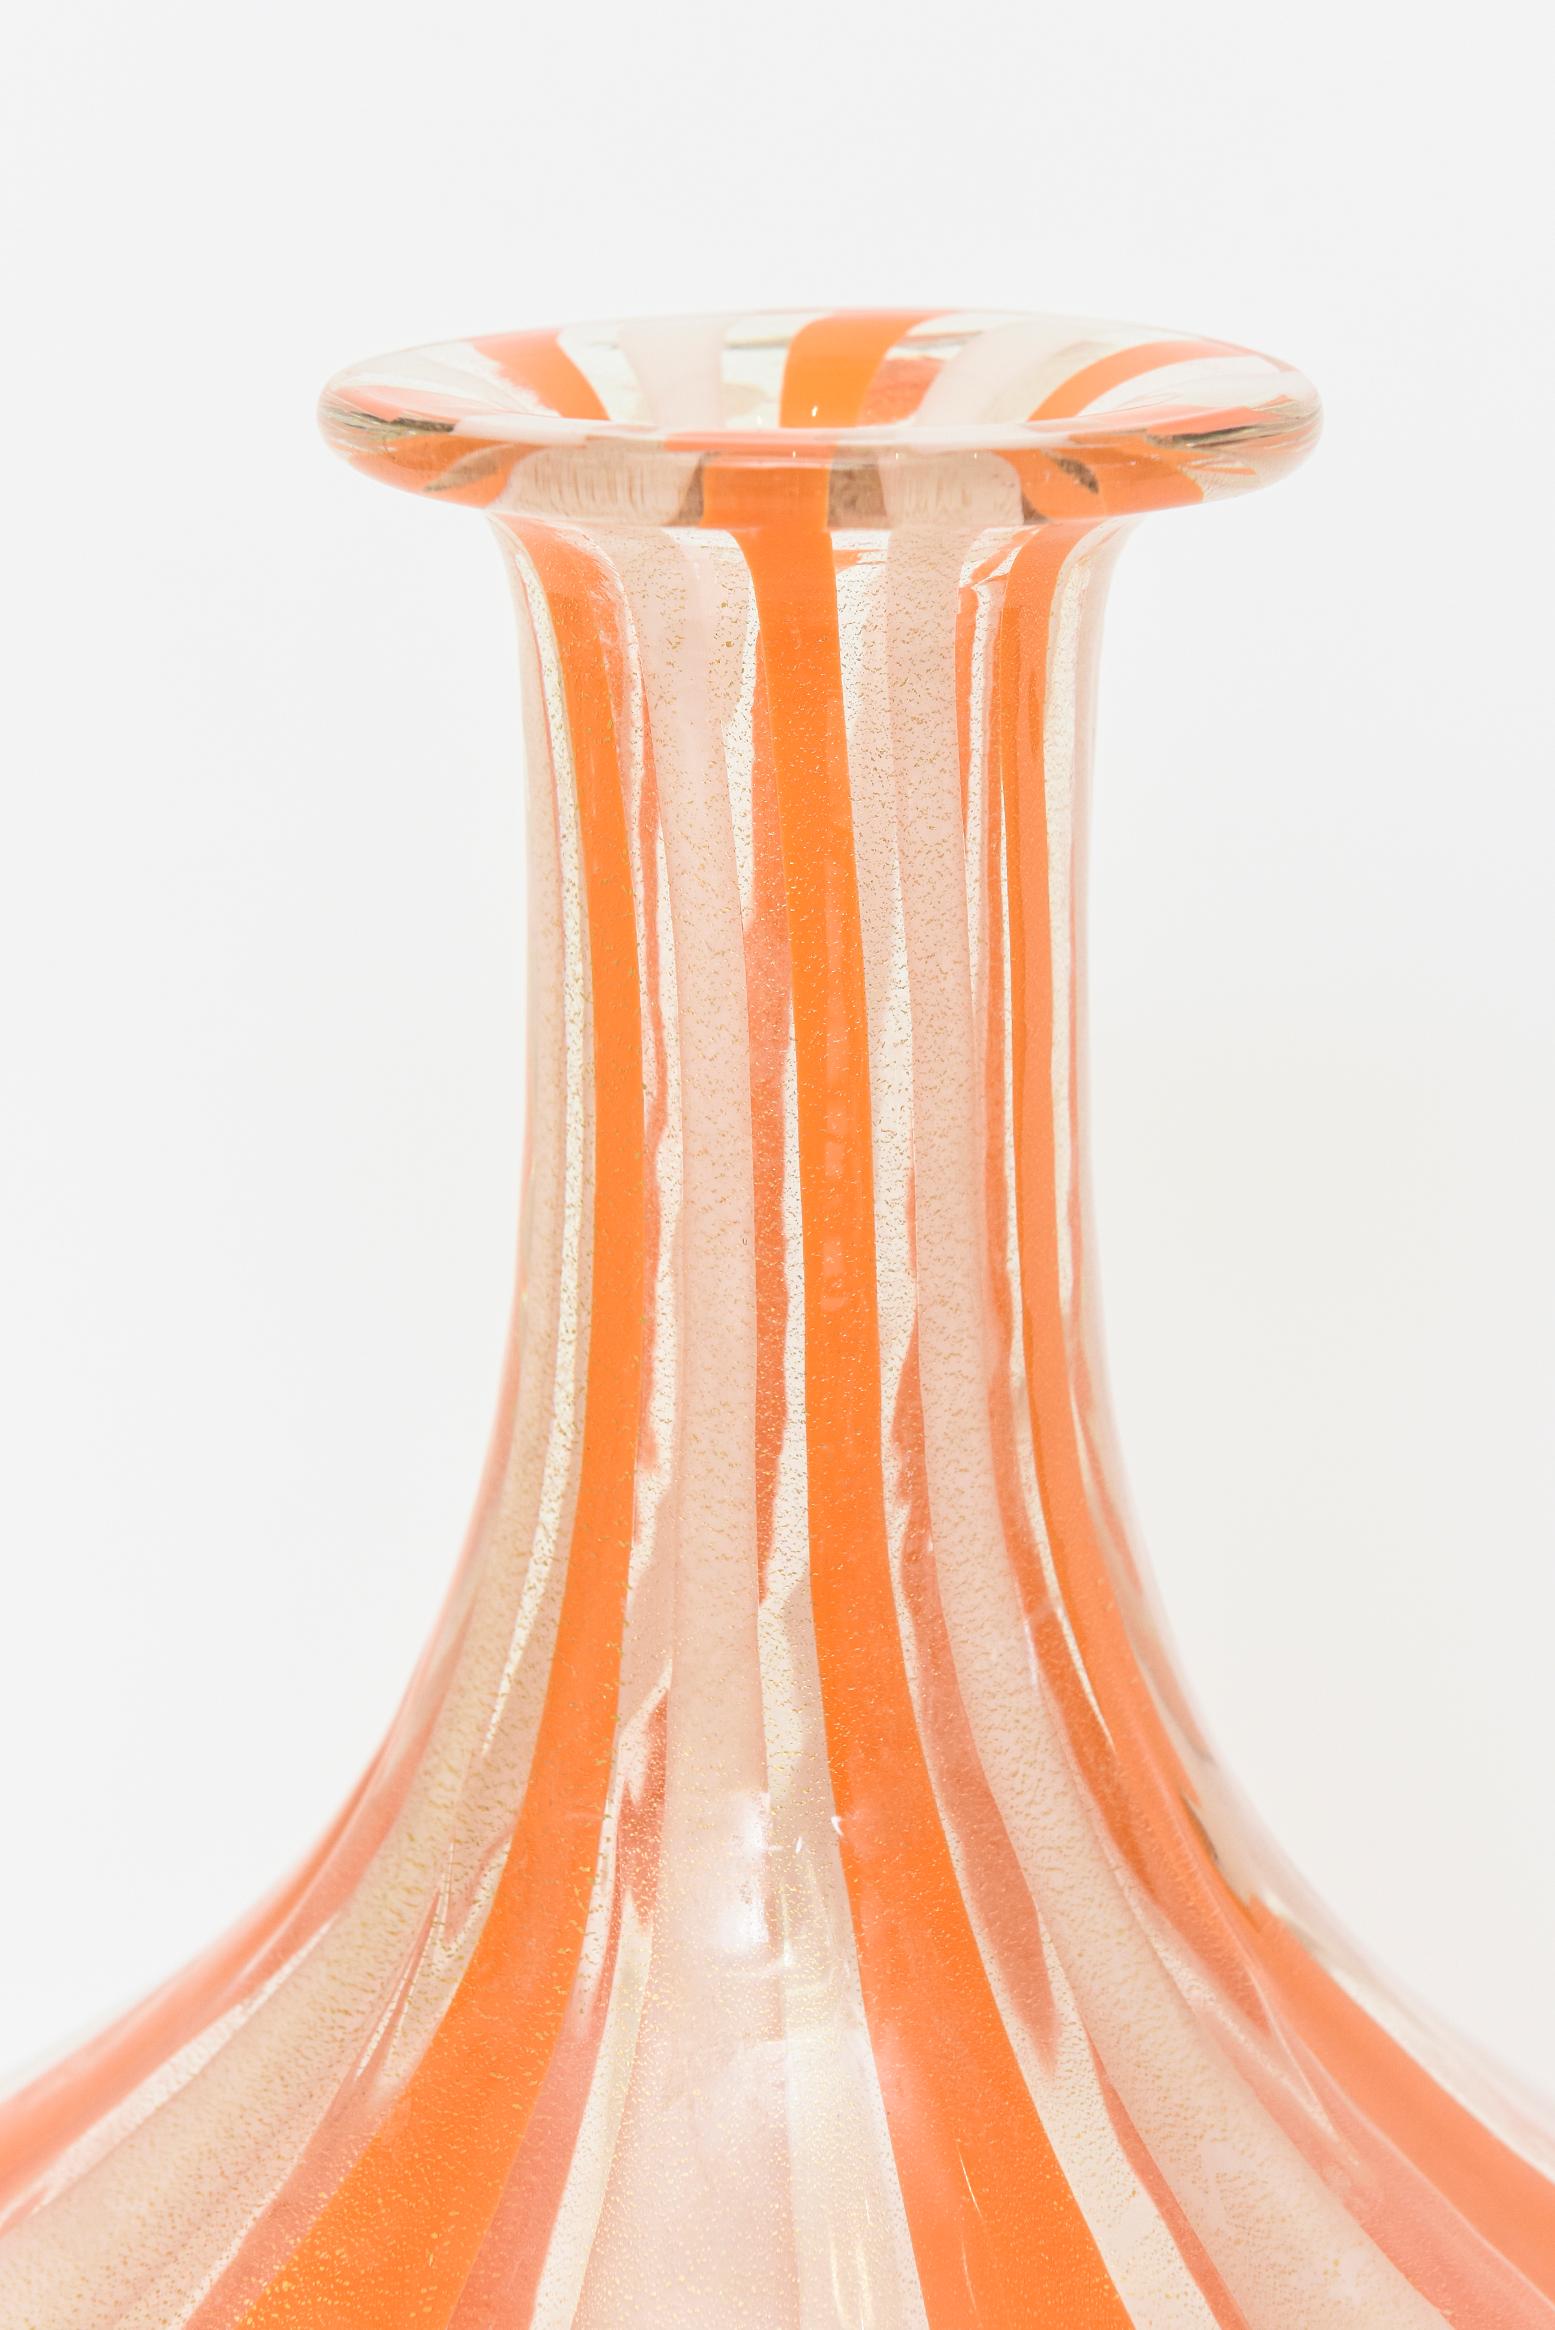 Italian Vintage Alfredo Barbini Orange, White Gold Aventurine Striped Vessel Bottle Vase